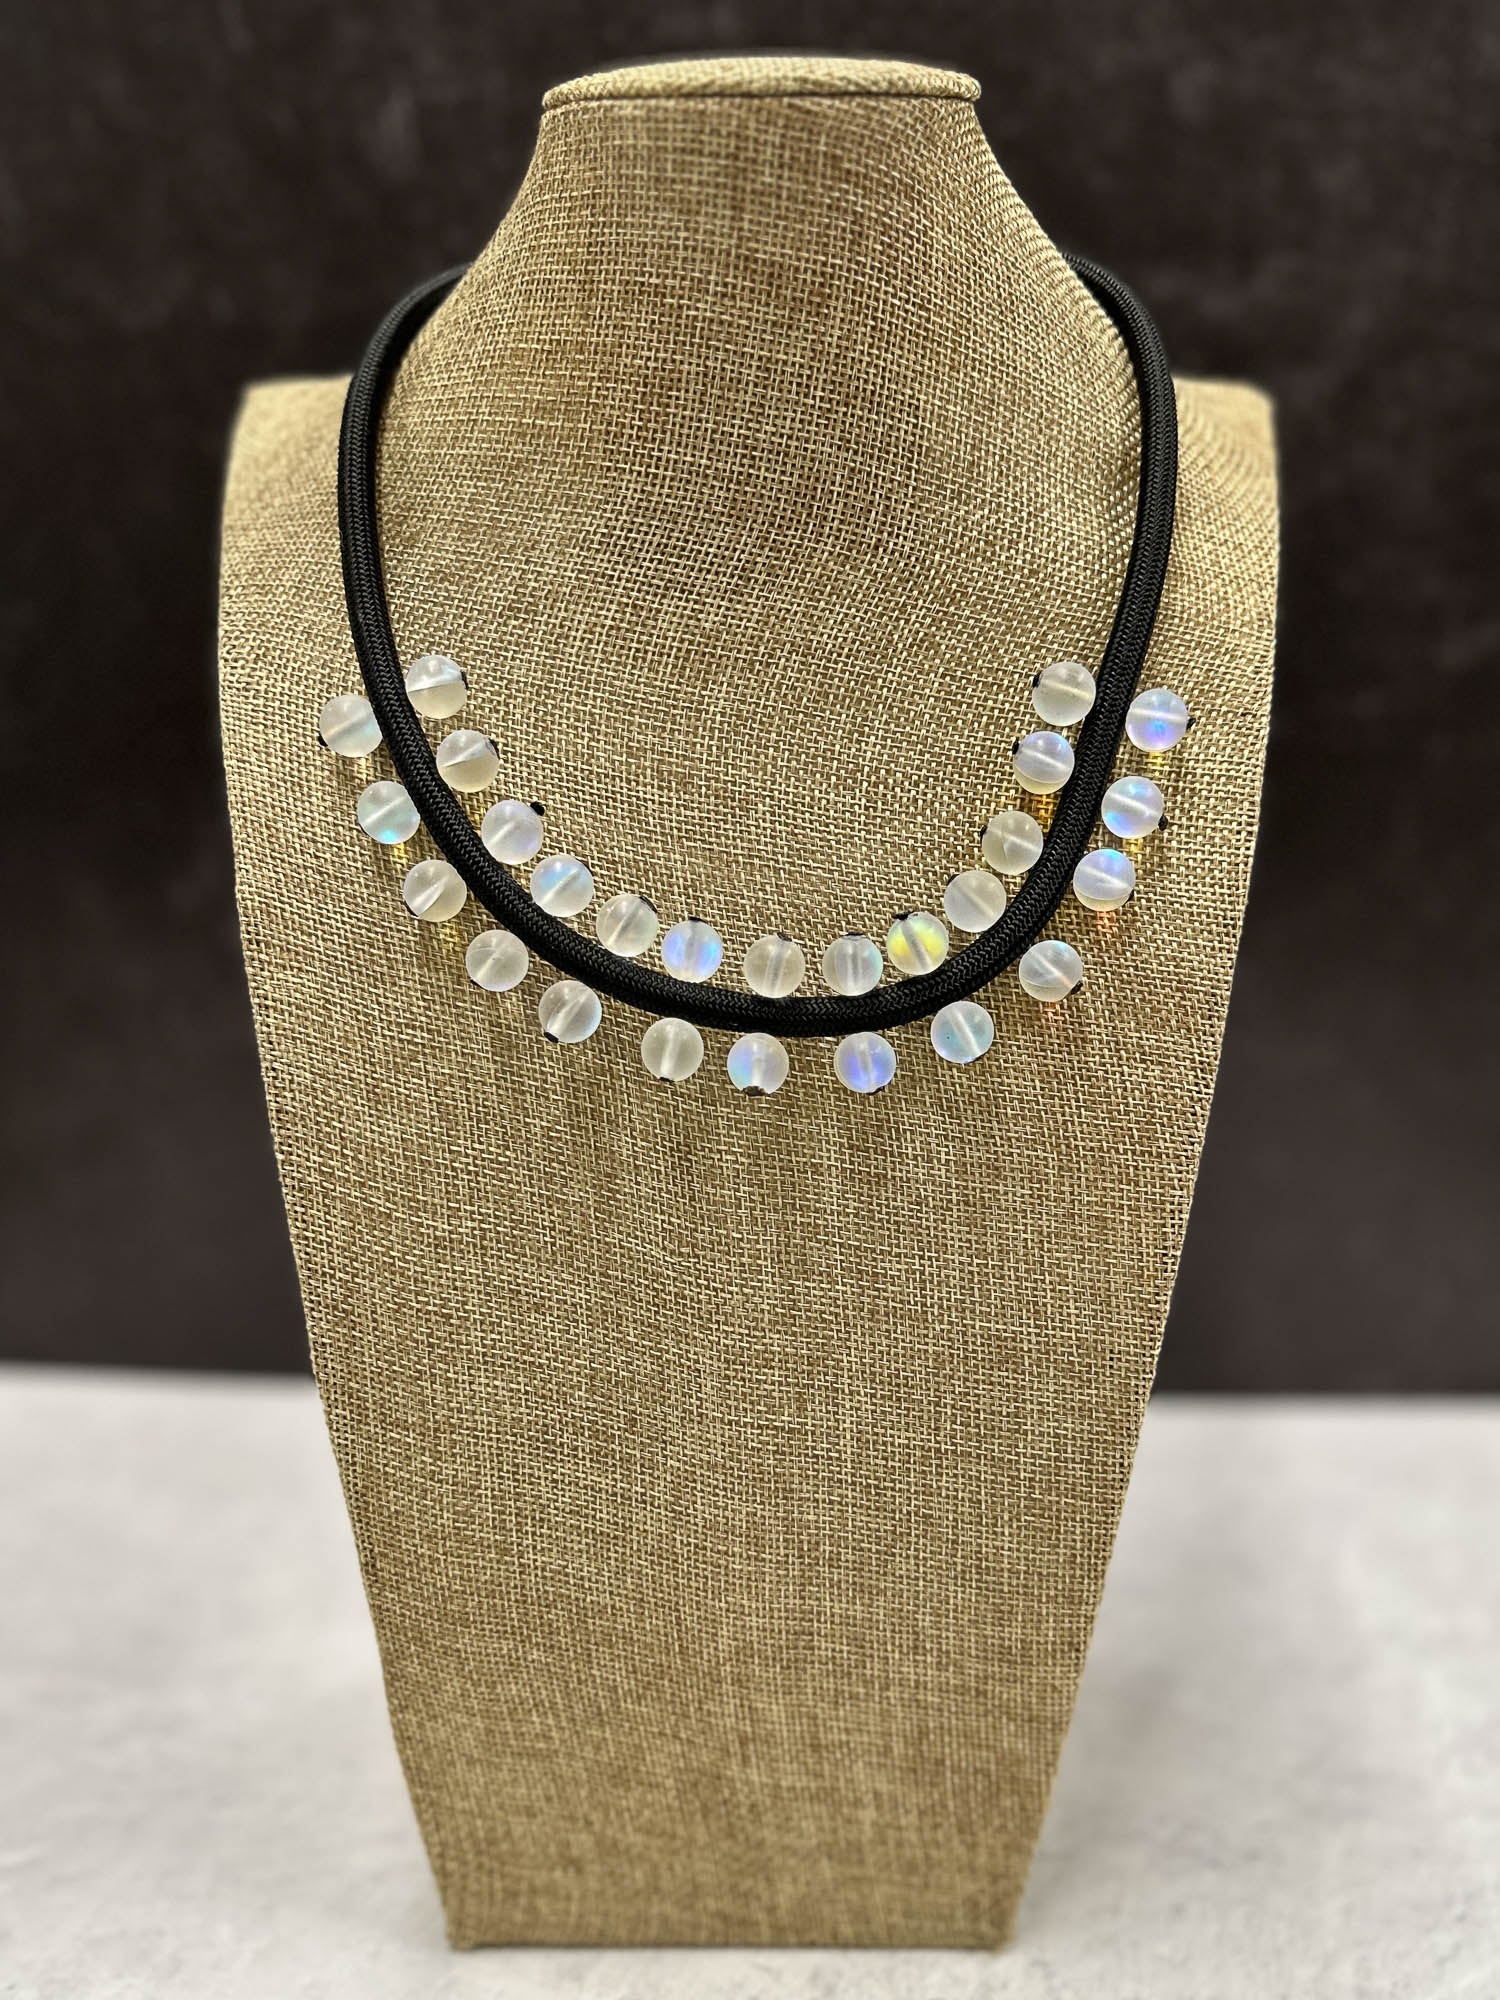 Christina Brampti Glass Beads on Cord Necklace, Black - Statement Boutique